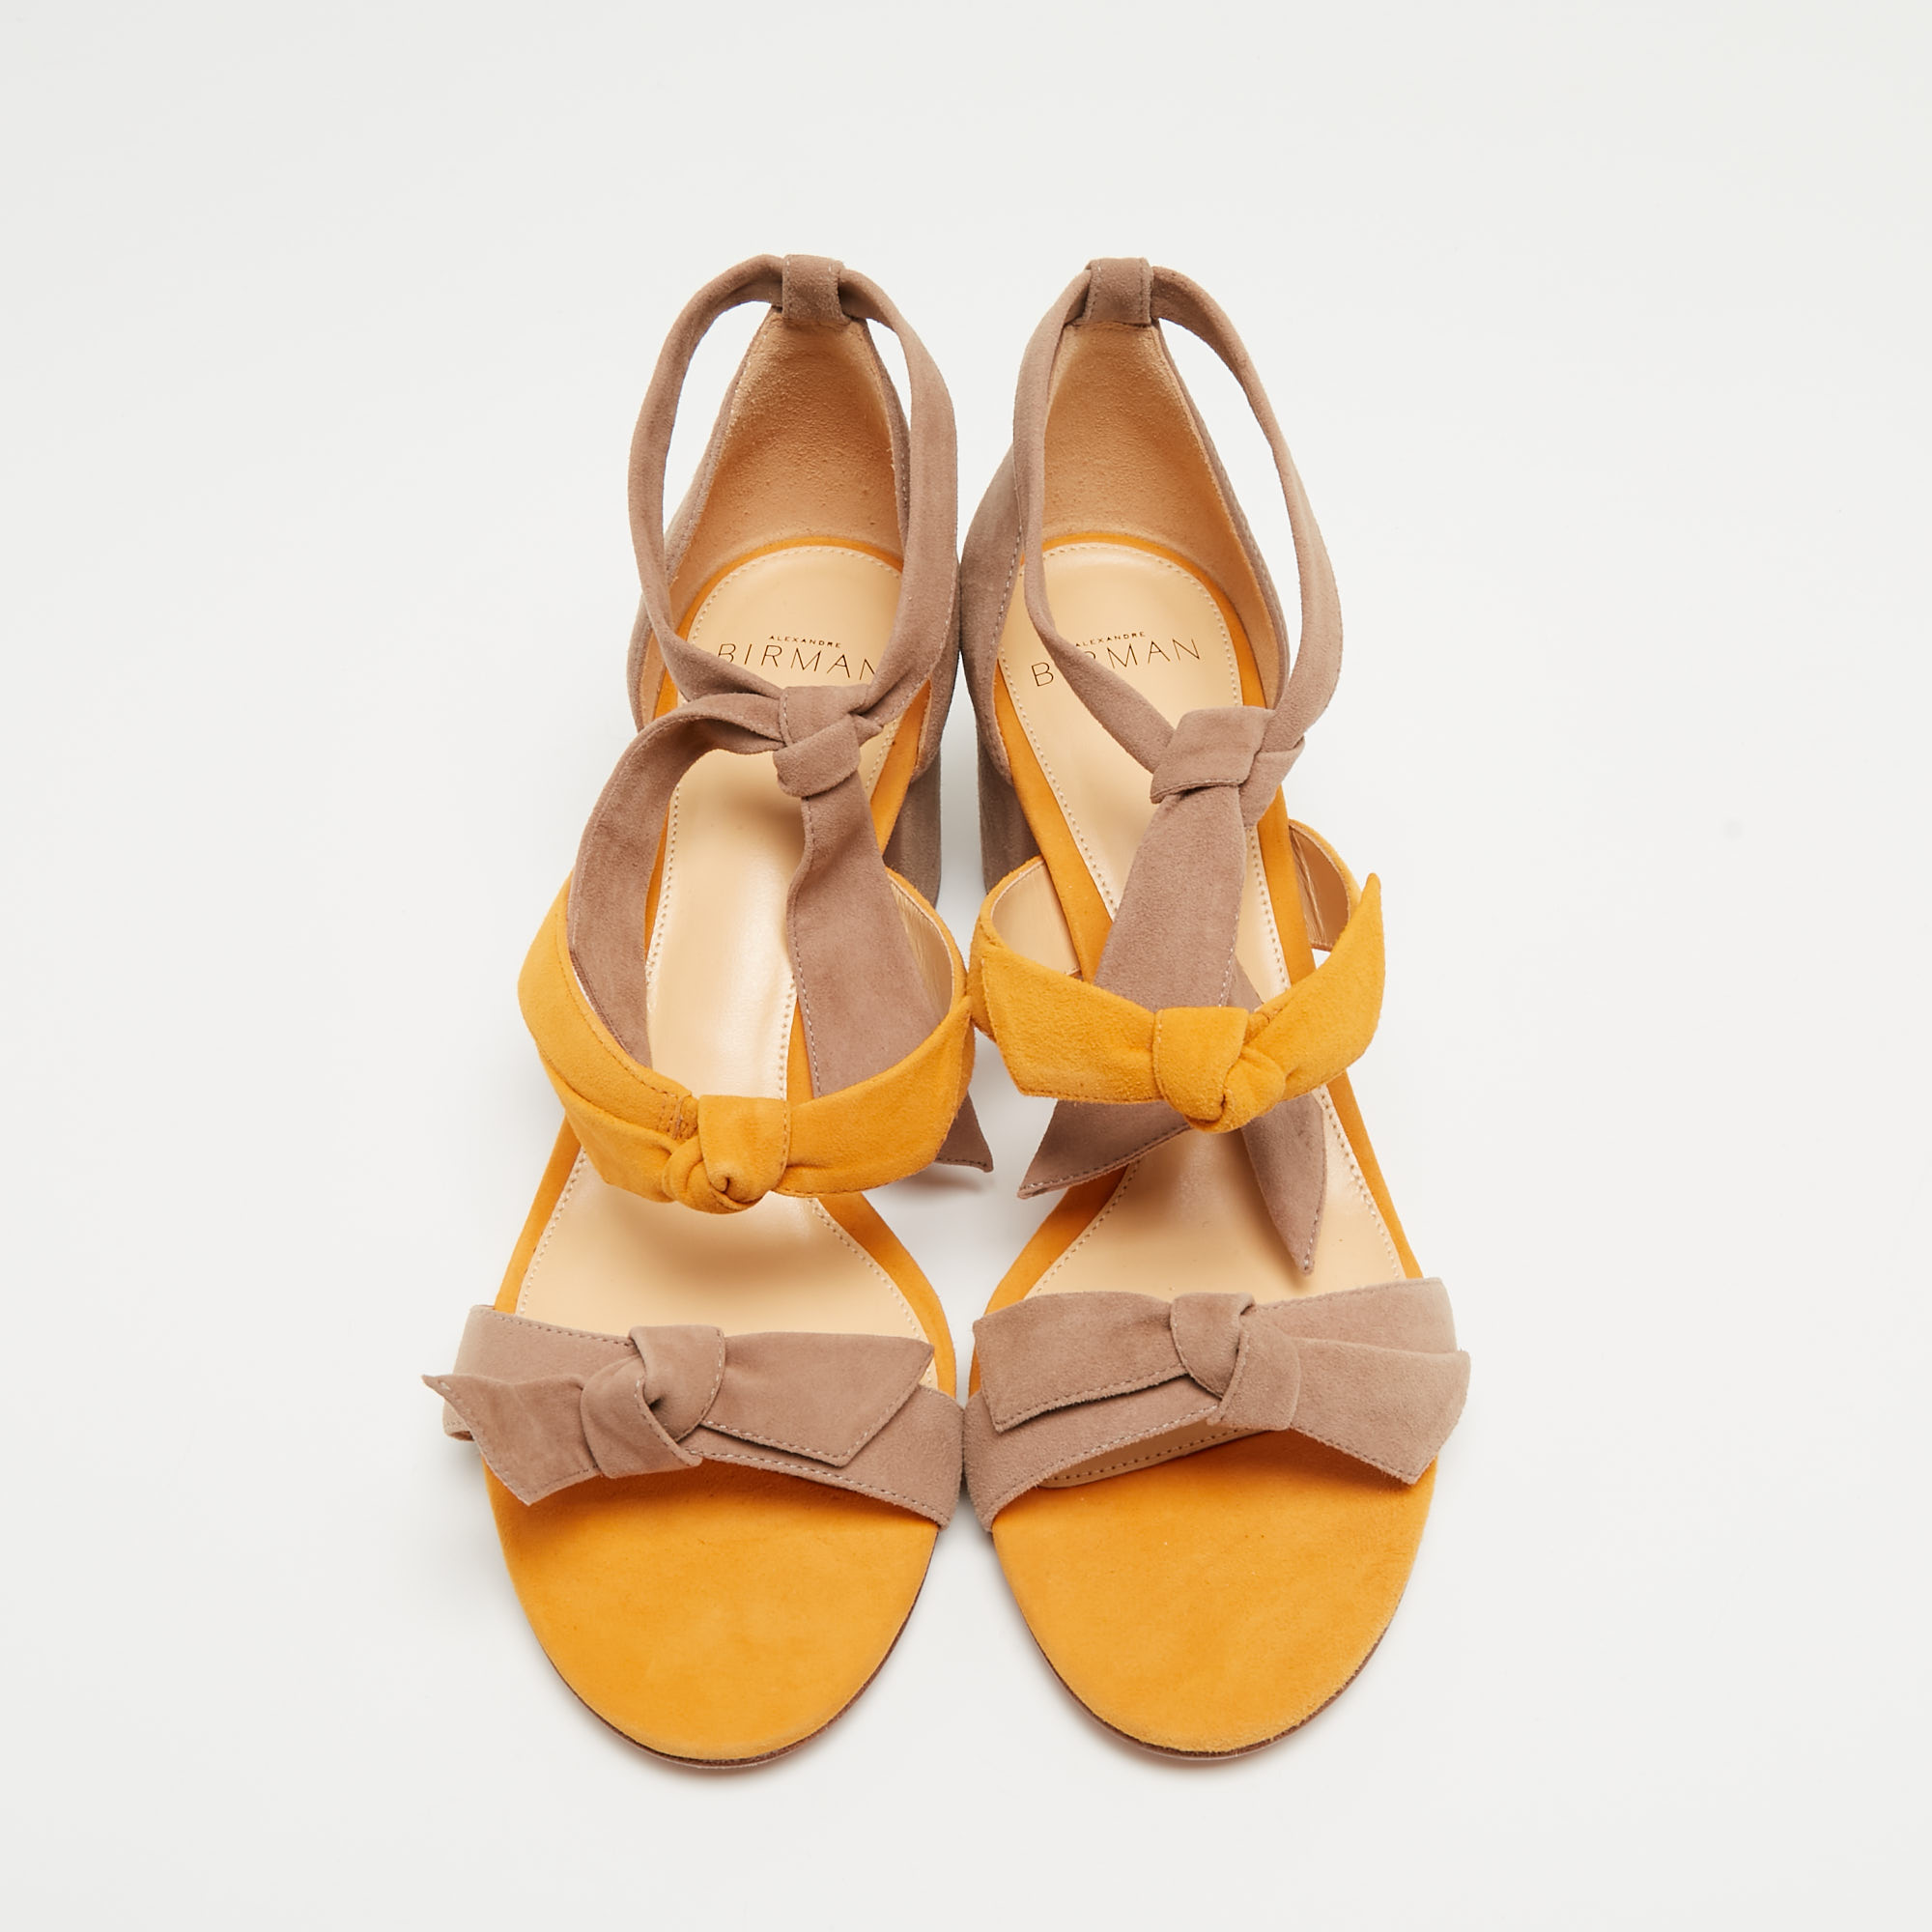 Alexandre Birman Yellow/Beige Suede Lolita Ankle Tie Sandals Size 38